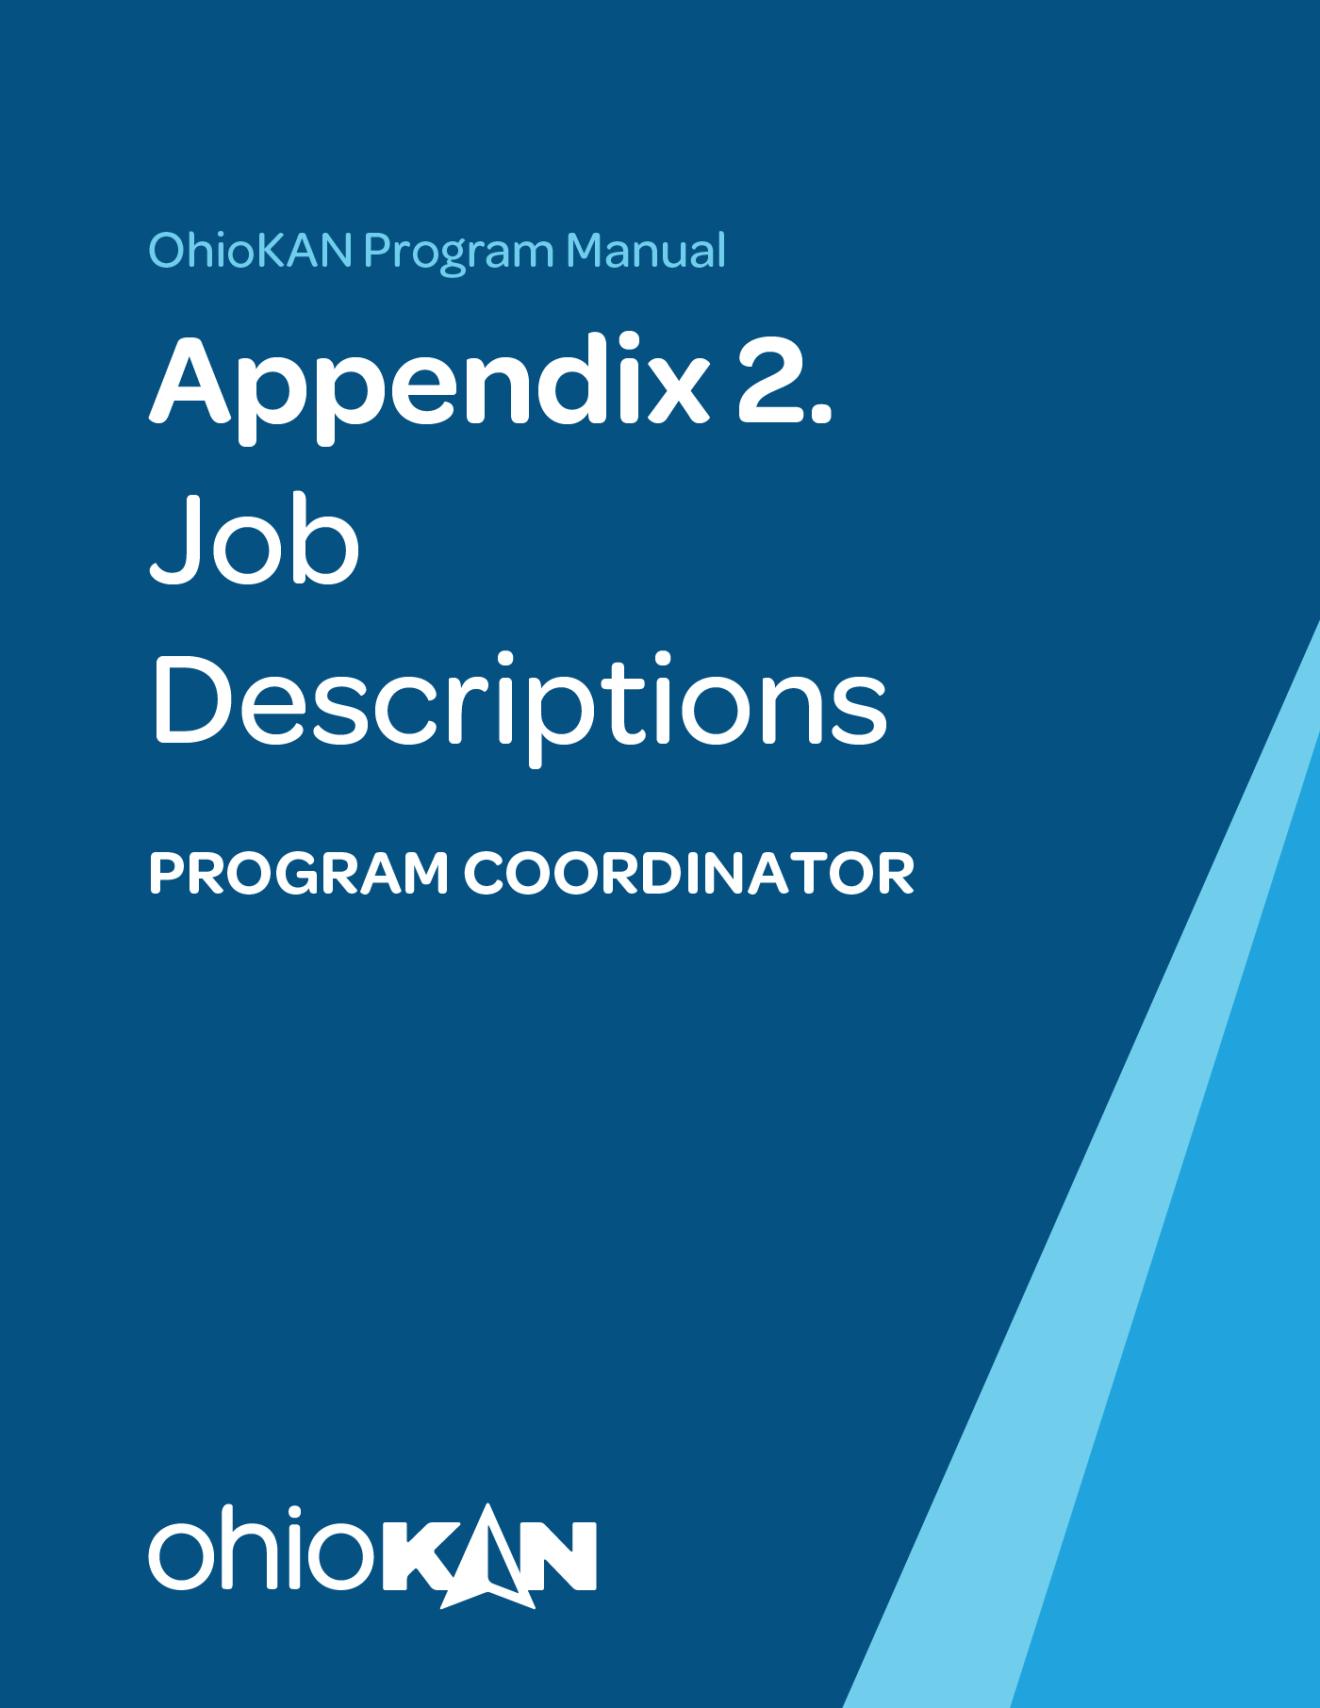 Appendix 2 Program Coordinator